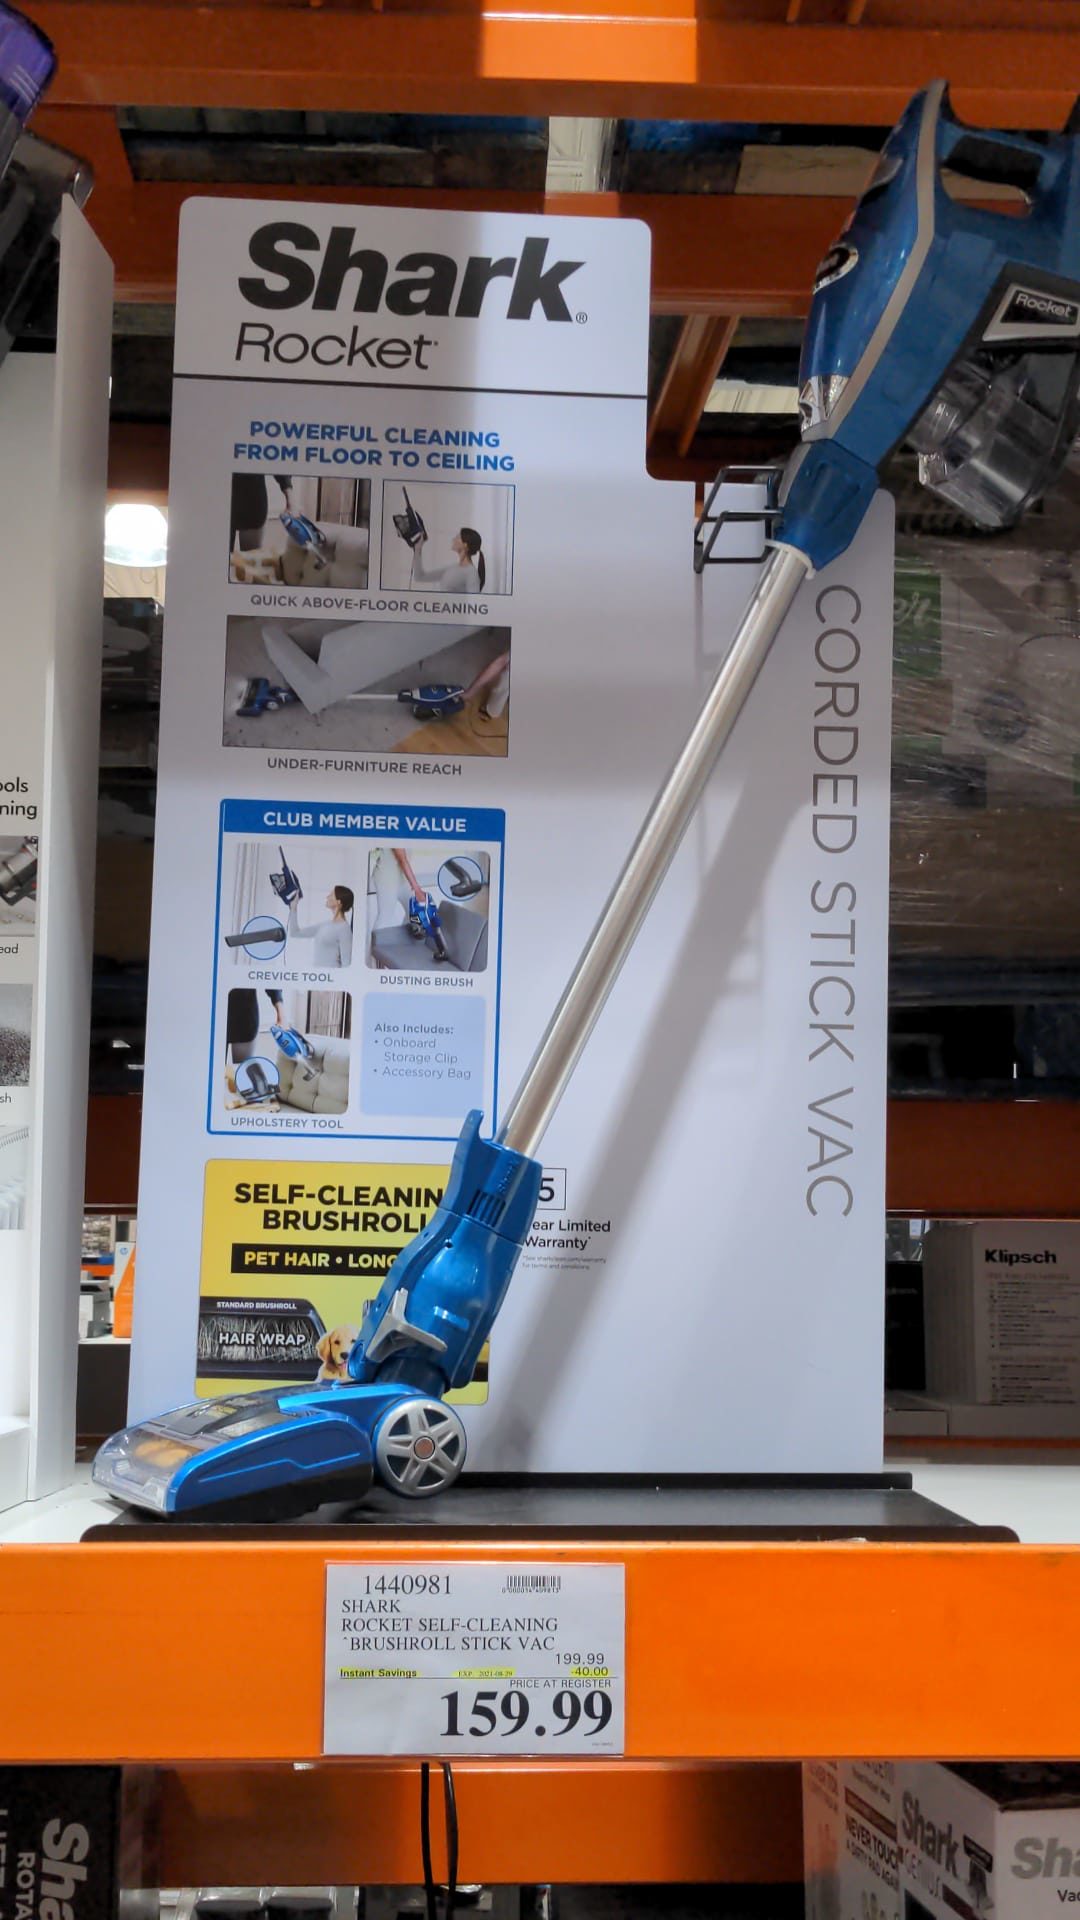 Costco Shark Rocket Self Cleaning Brushroll Corded Stick Vacuum For 159 99 Regular 199 20 Off Redflagdeals Com Forums